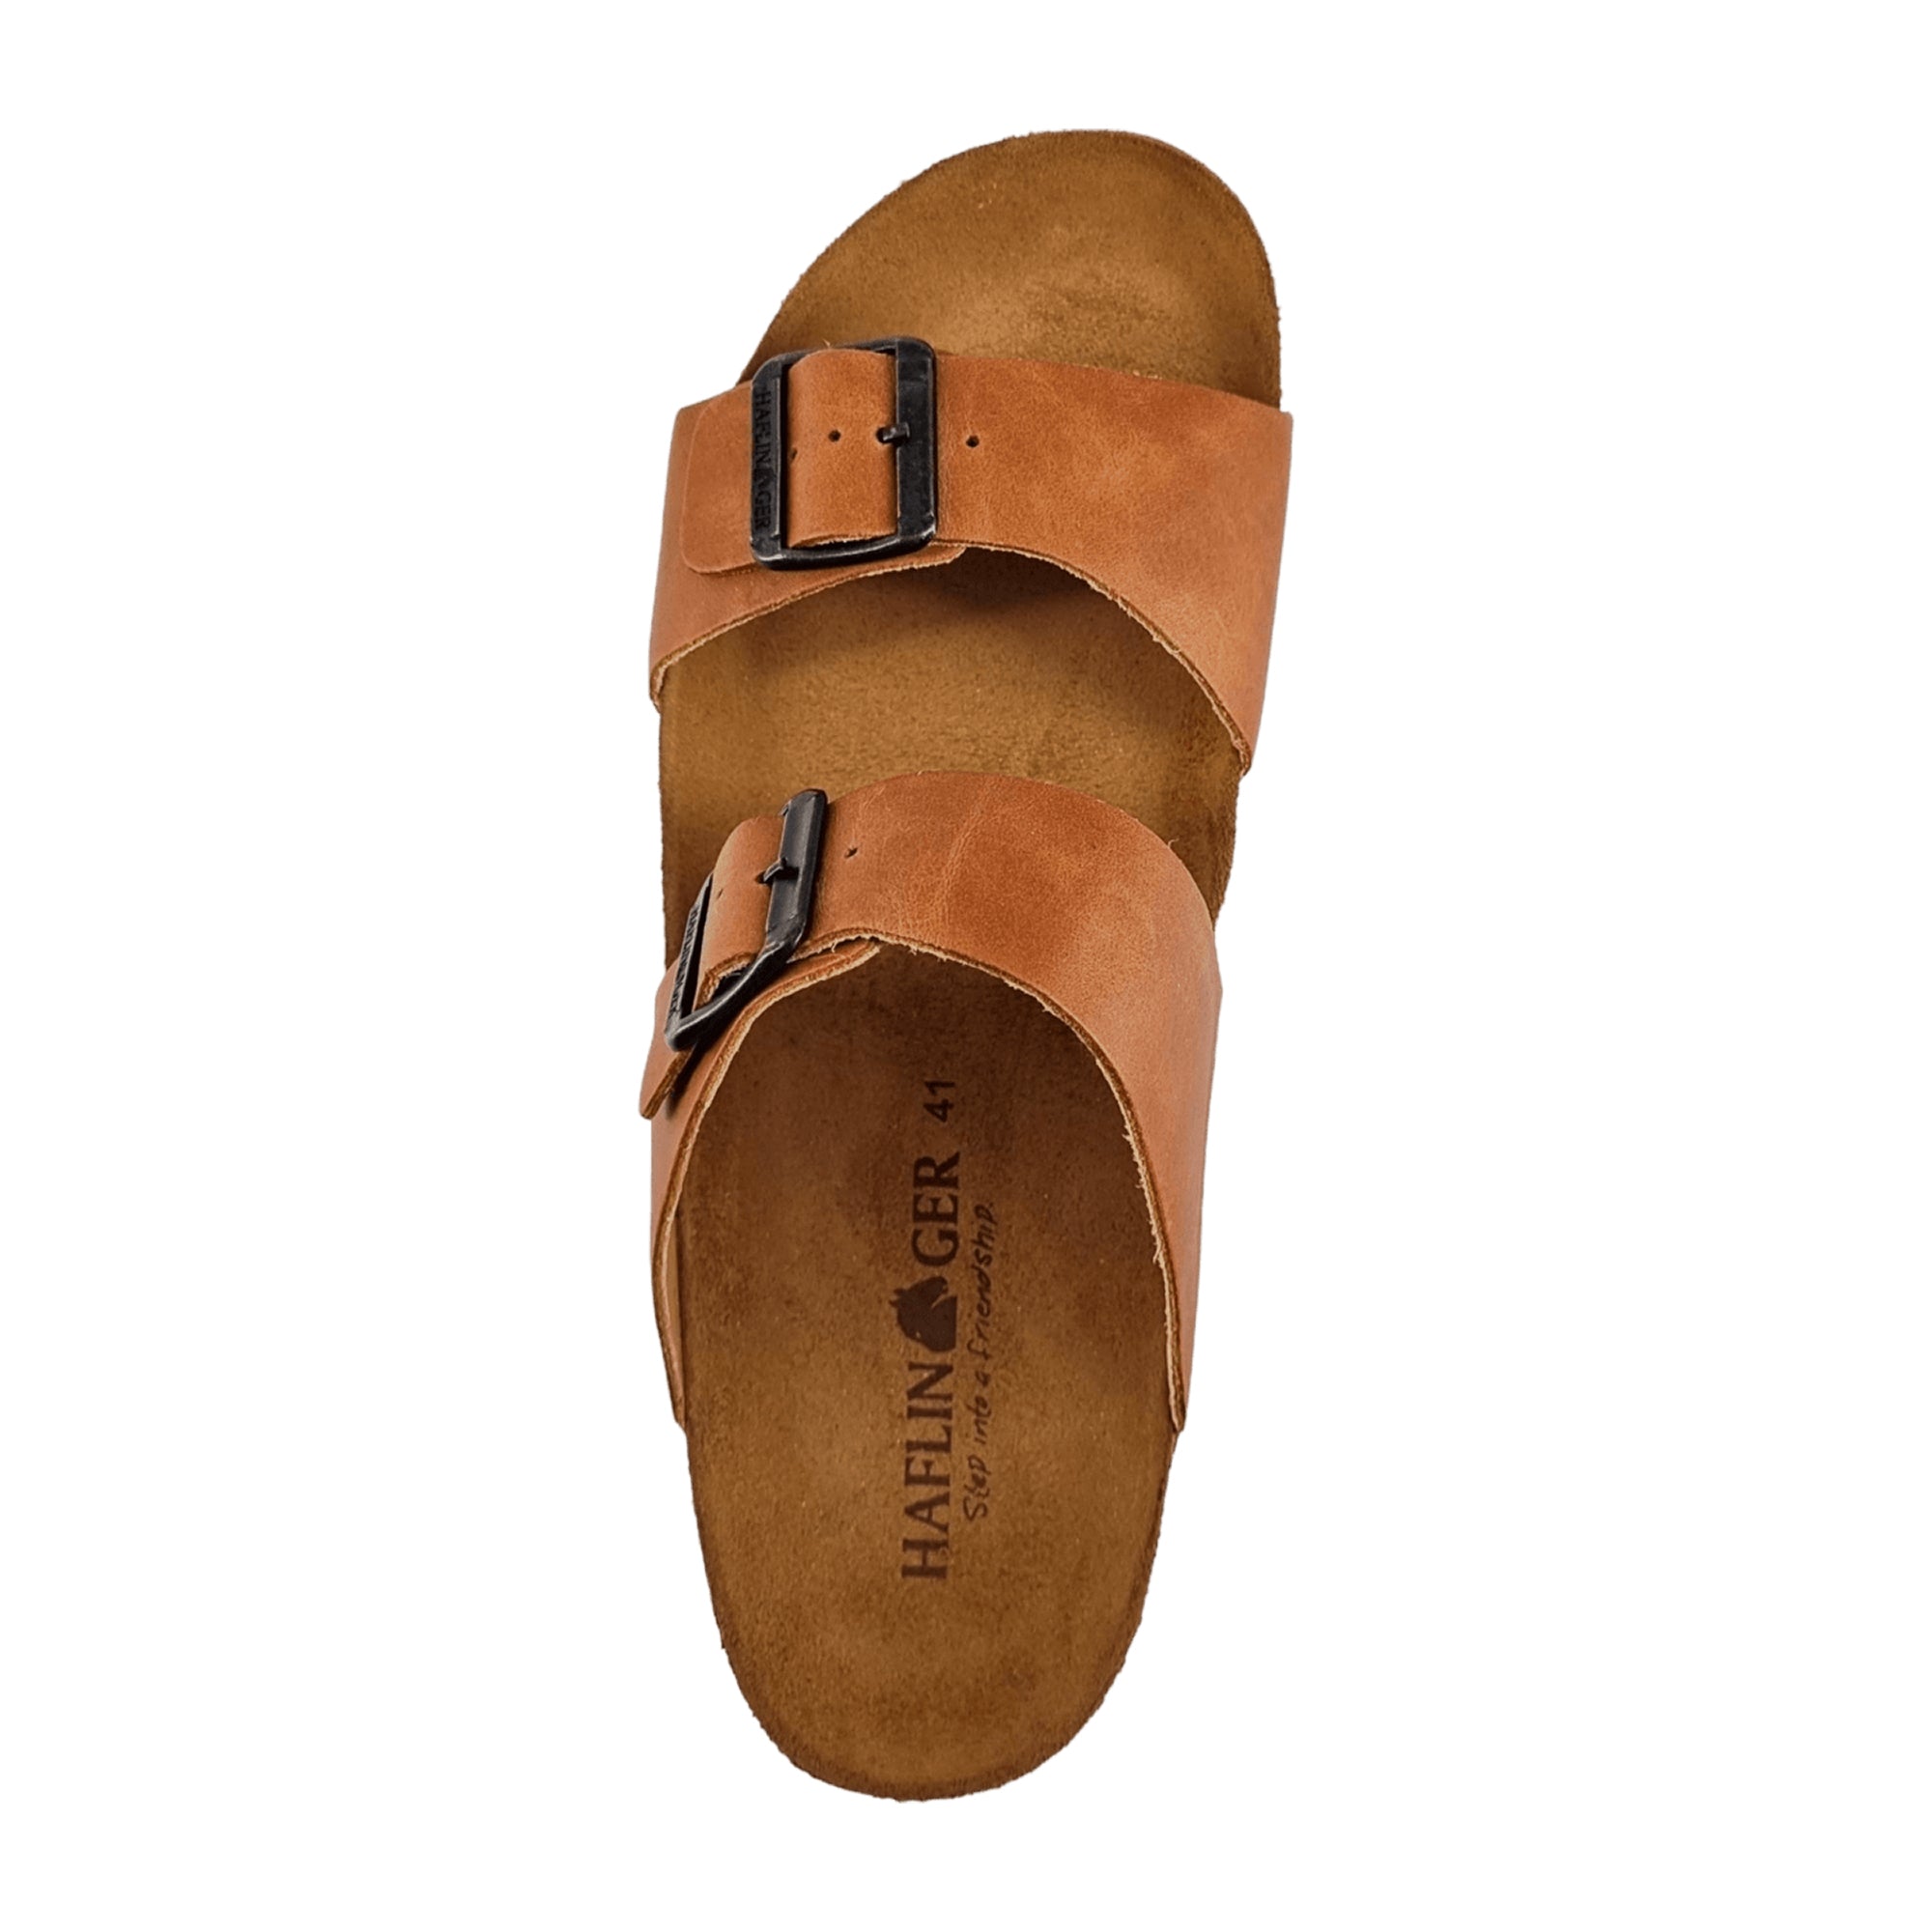 Haflinger Bio Andrea Women's Sandals - Stylish & Eco-Friendly, Brown